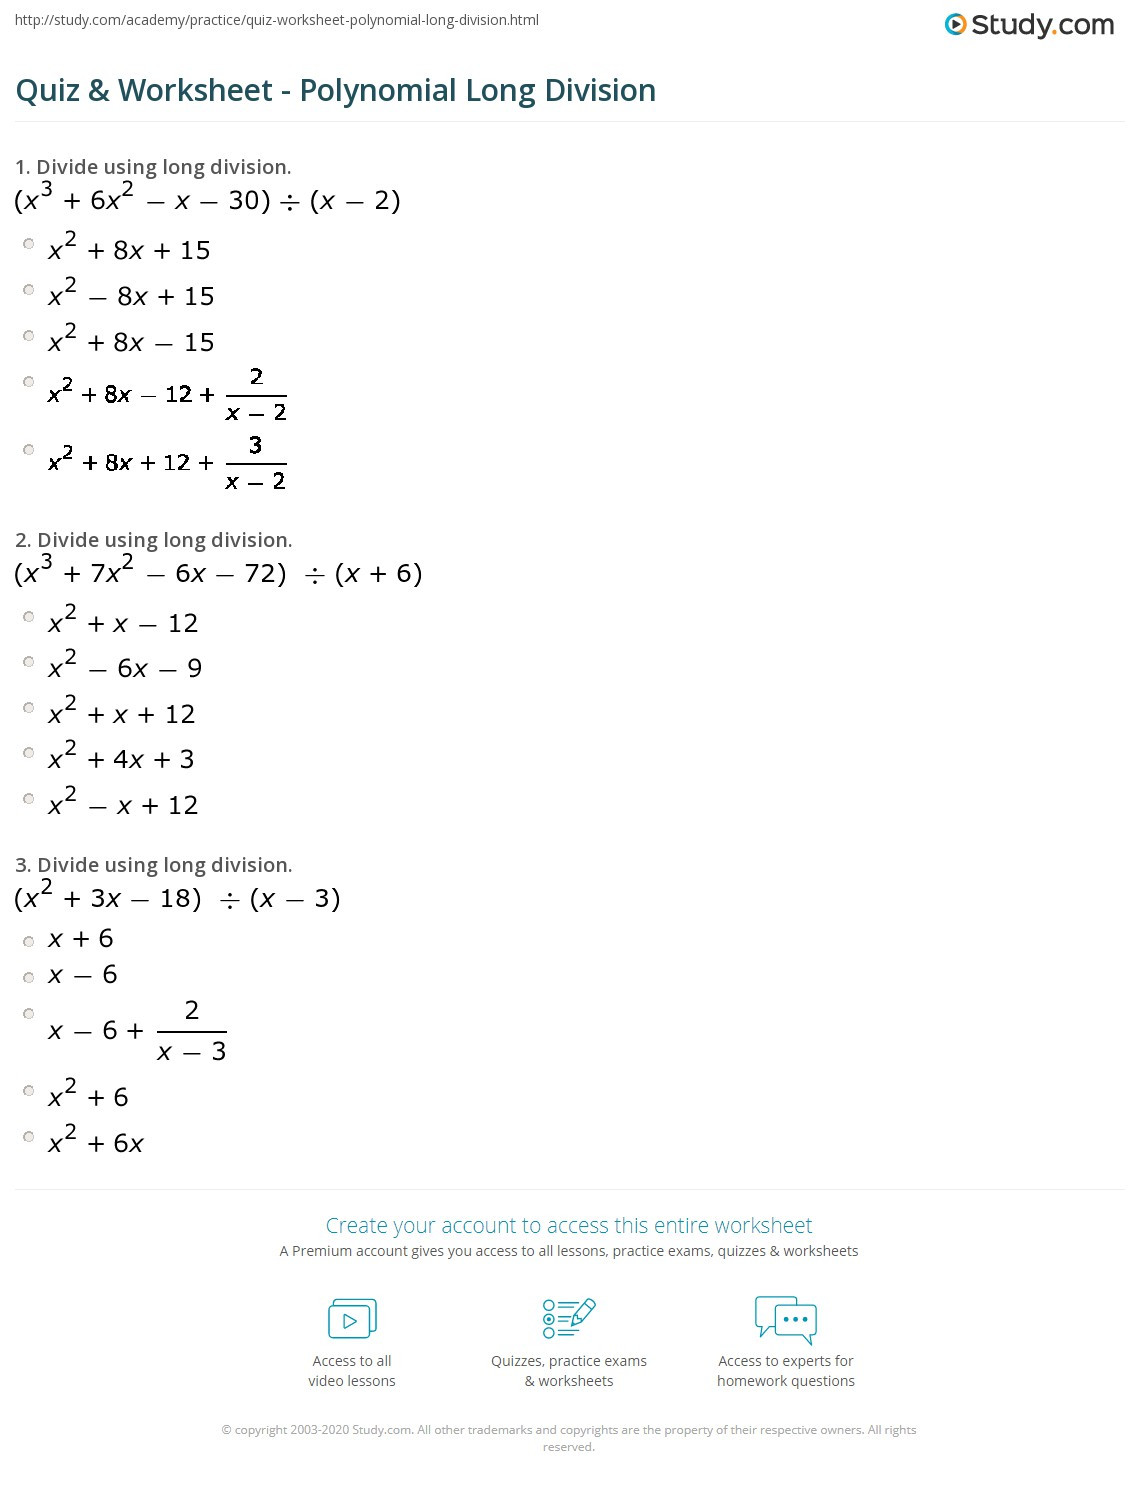 Polynomial Long Division Worksheet Quiz &amp; Worksheet Polynomial Long Division